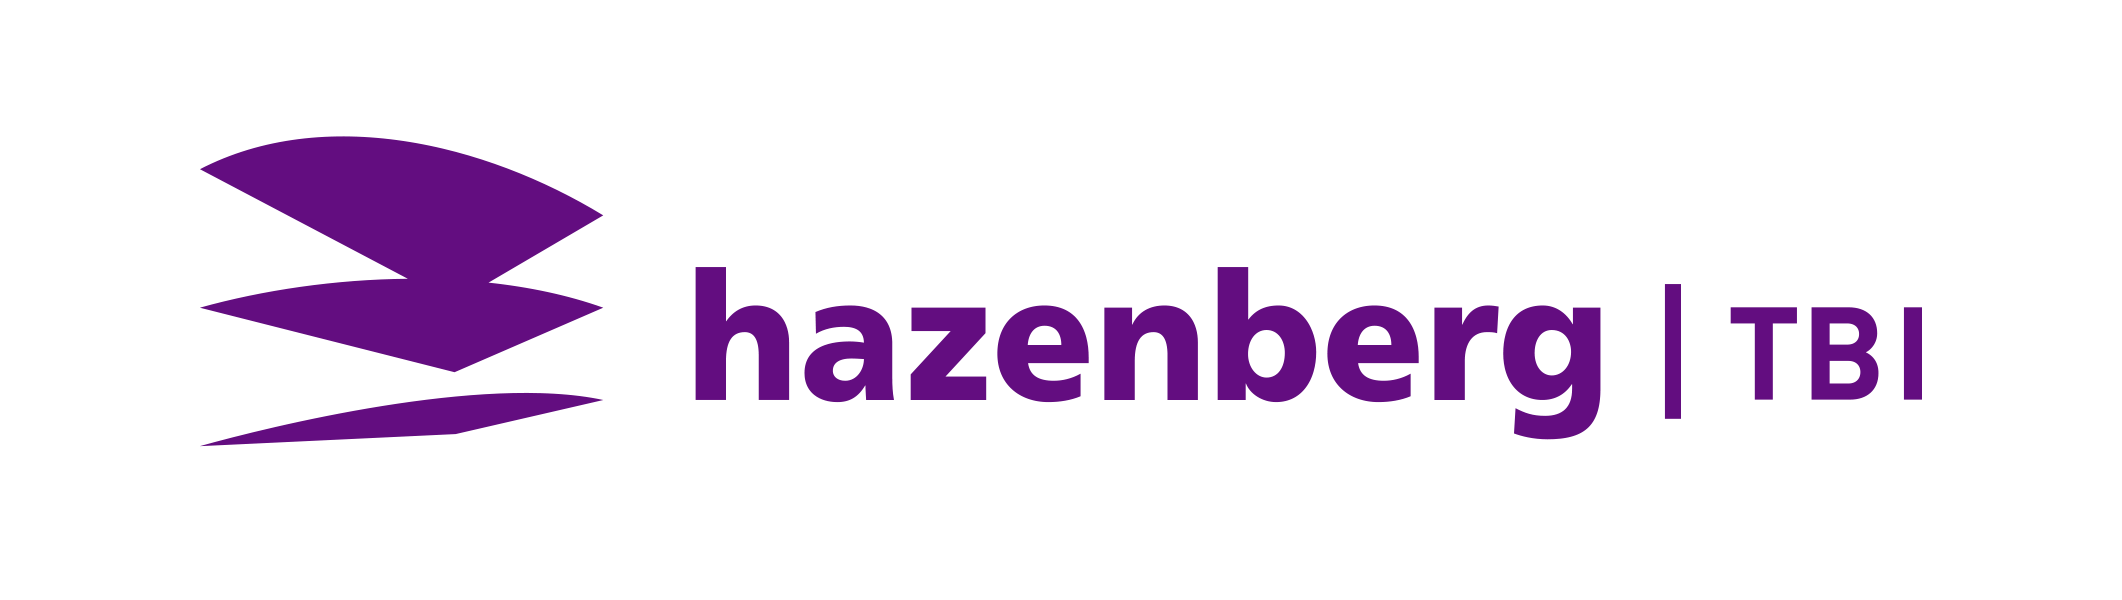 Logo Tbi Hazenberg Rgb